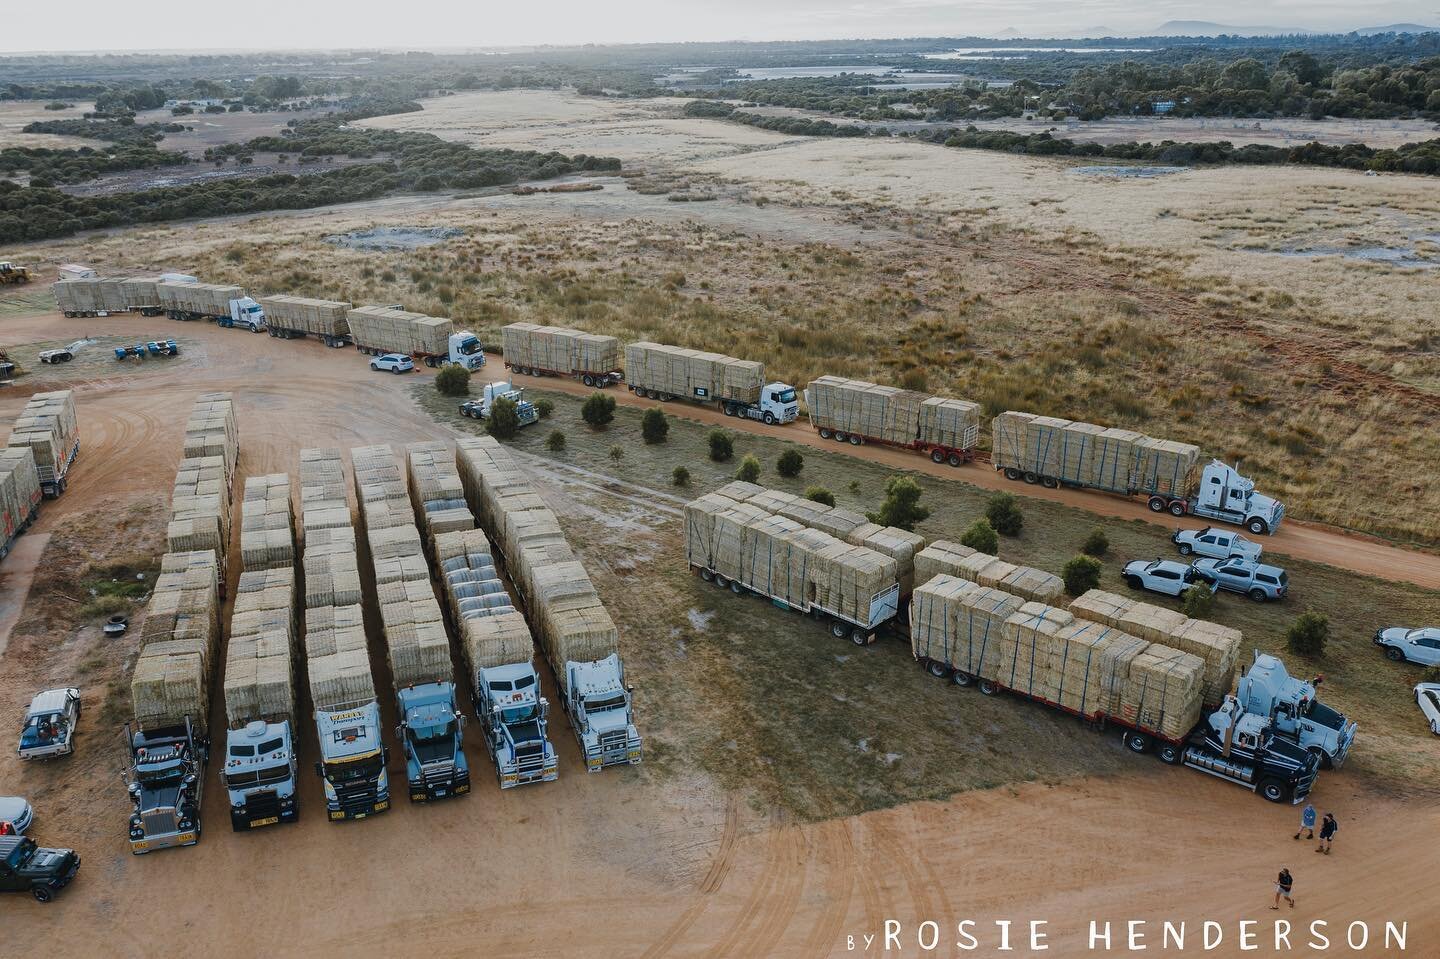 How epic is @byrosiehenderson 

ESPERANCE &gt; LEONORA @farmersacrossborders 

BTS via @laviniawehr.social 

#australianagriculture #drought #WAFarmers #PRinAgriculture #PRWesternAustralia #FarmersAcrossBorders #hayrun #drought #trucks #pr #australia